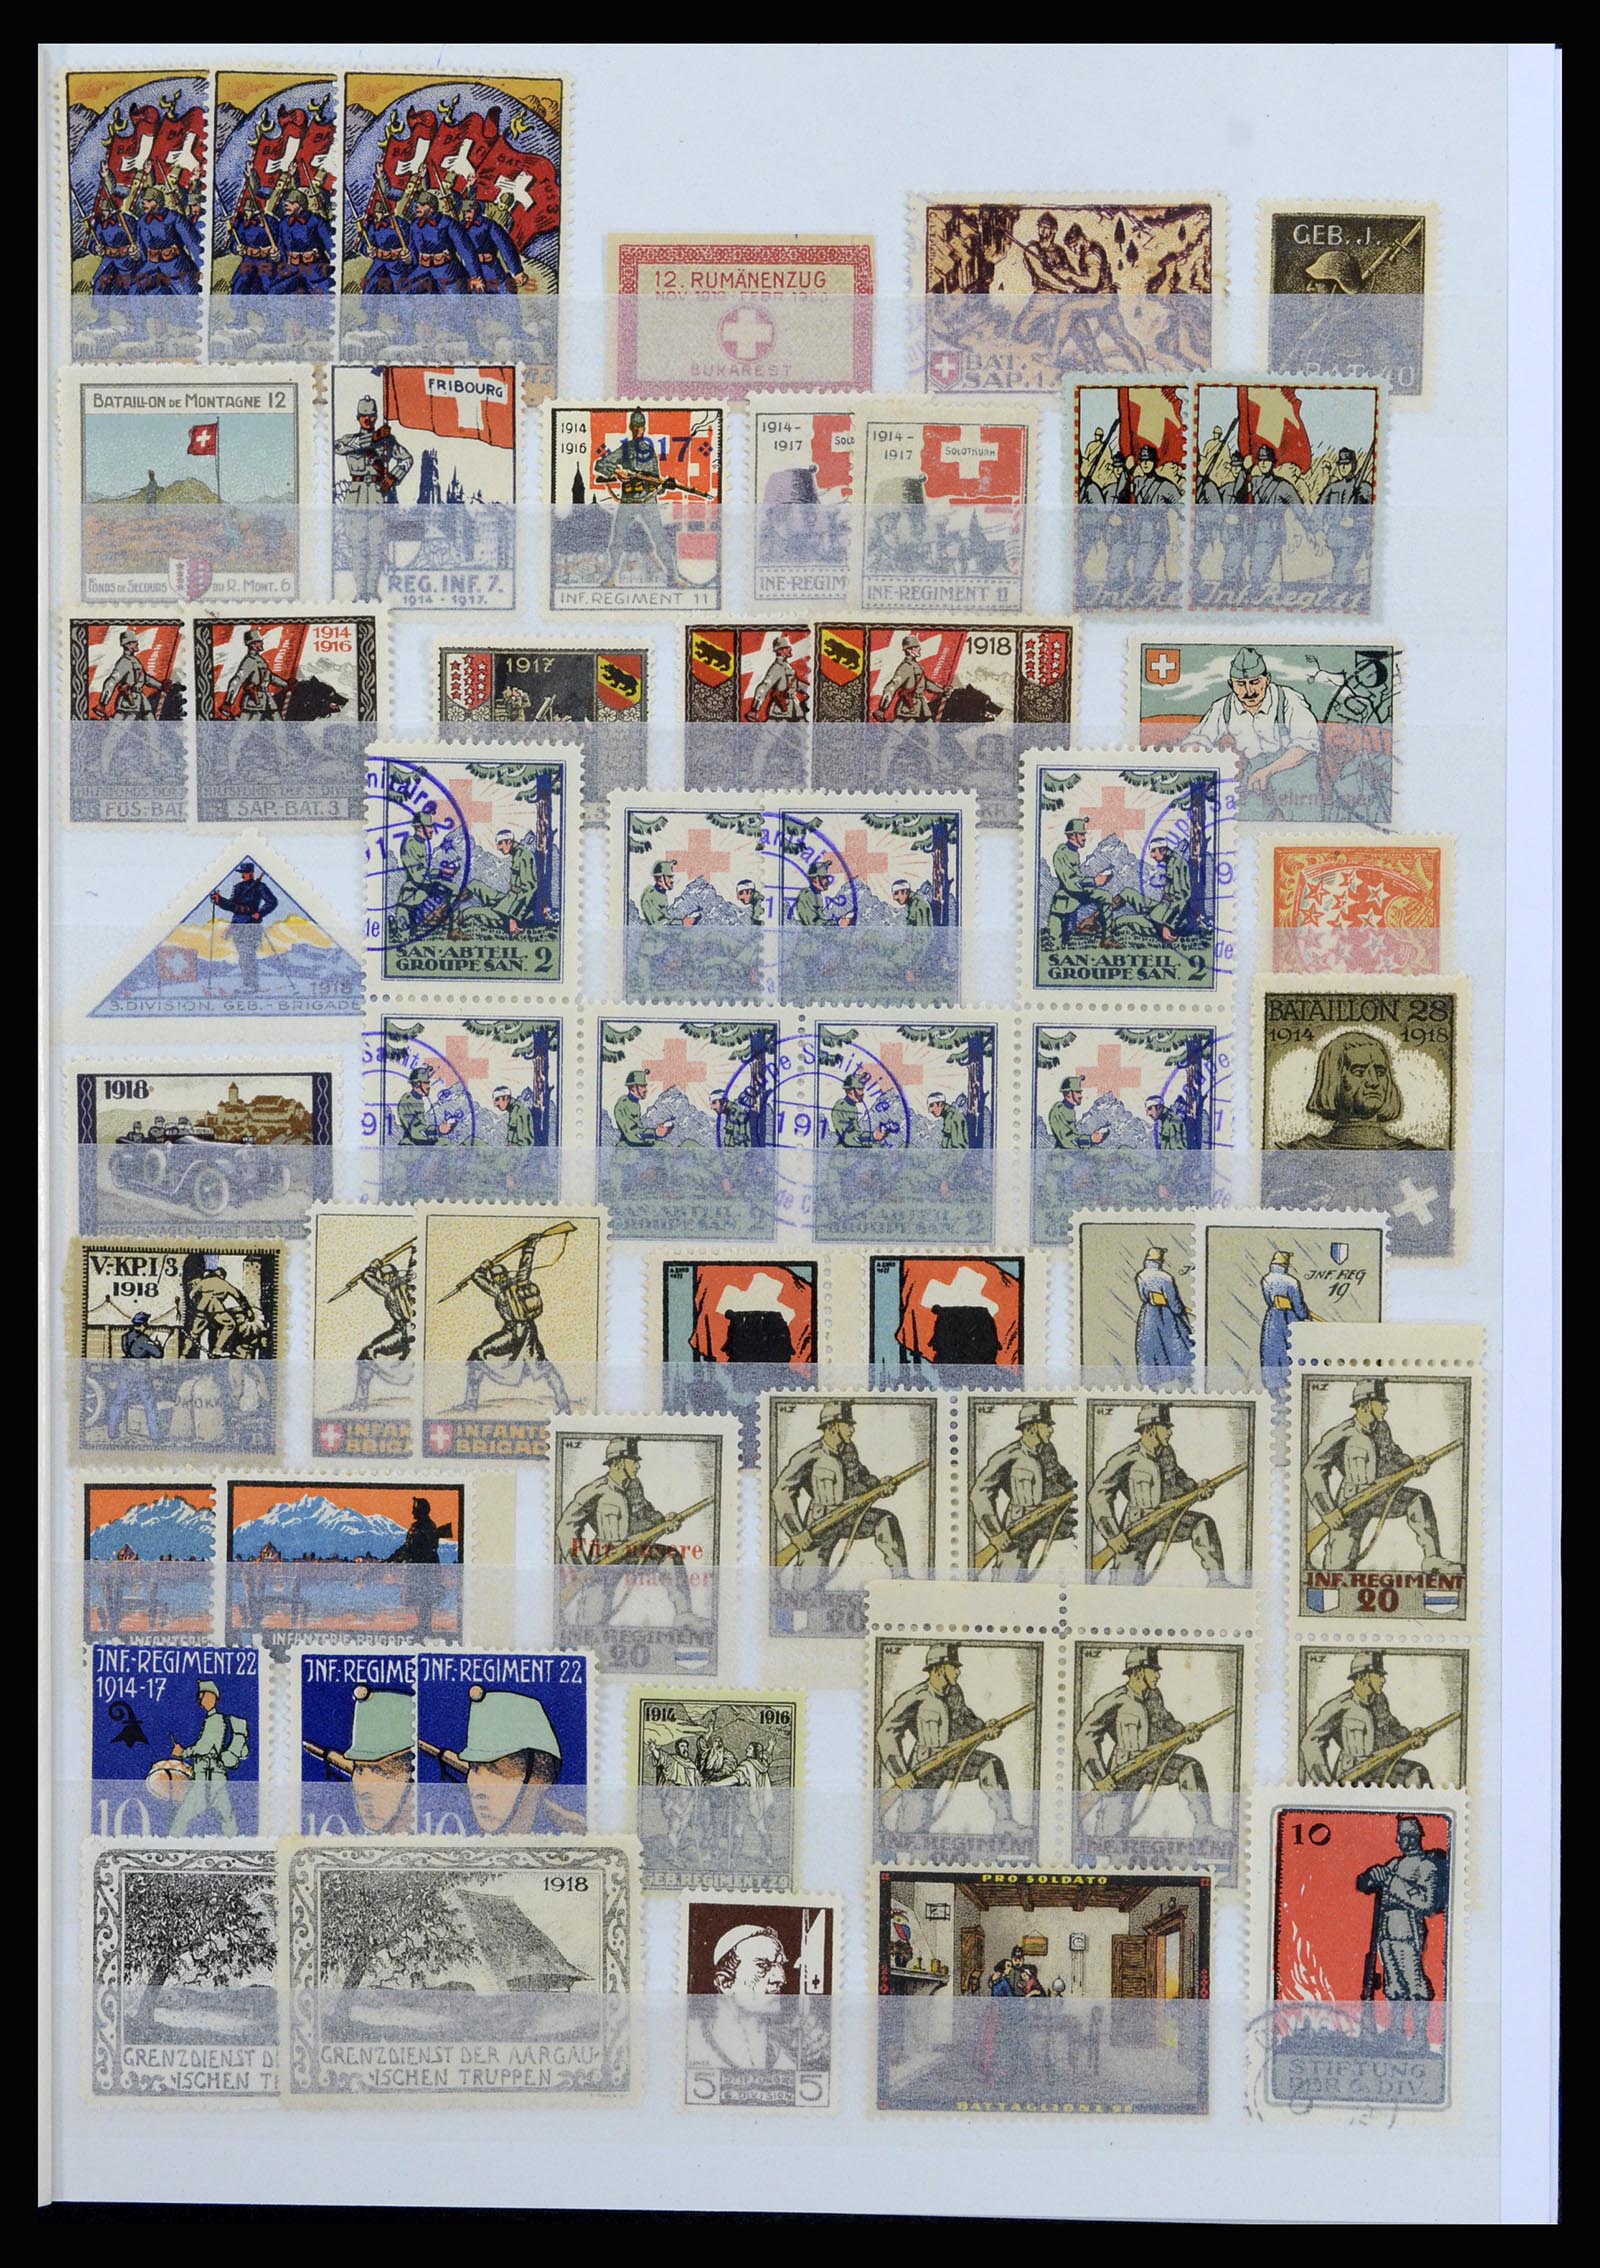 37149 001 - Stamp collection 37149 Switzerland soldier stamps 1914-1945.